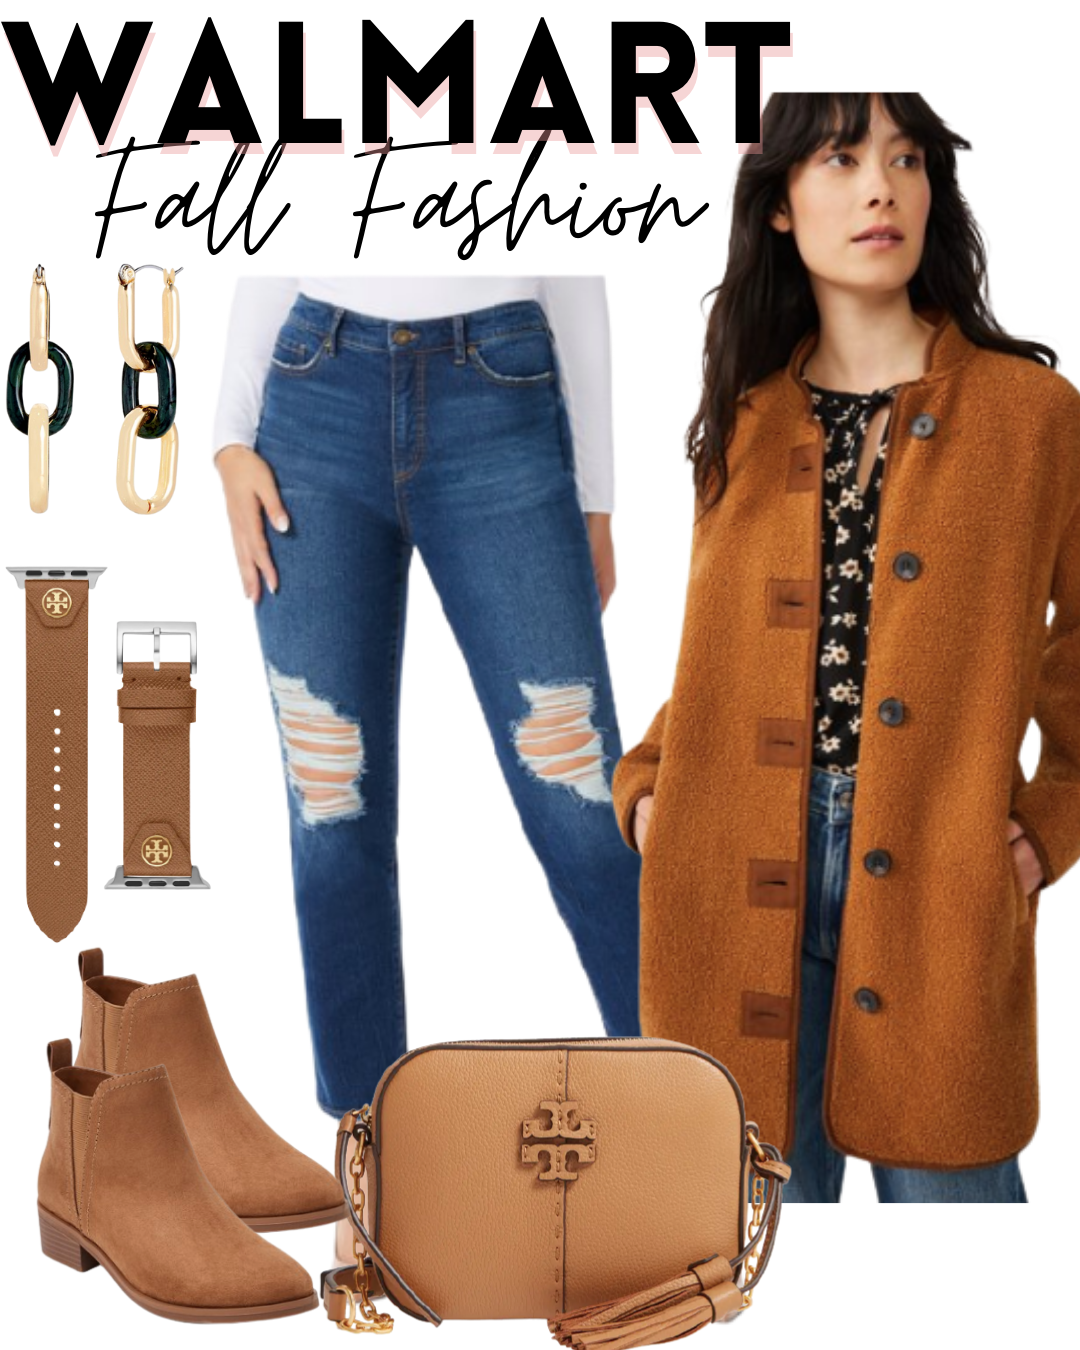 Walmart Fall Fashion Finds 2021